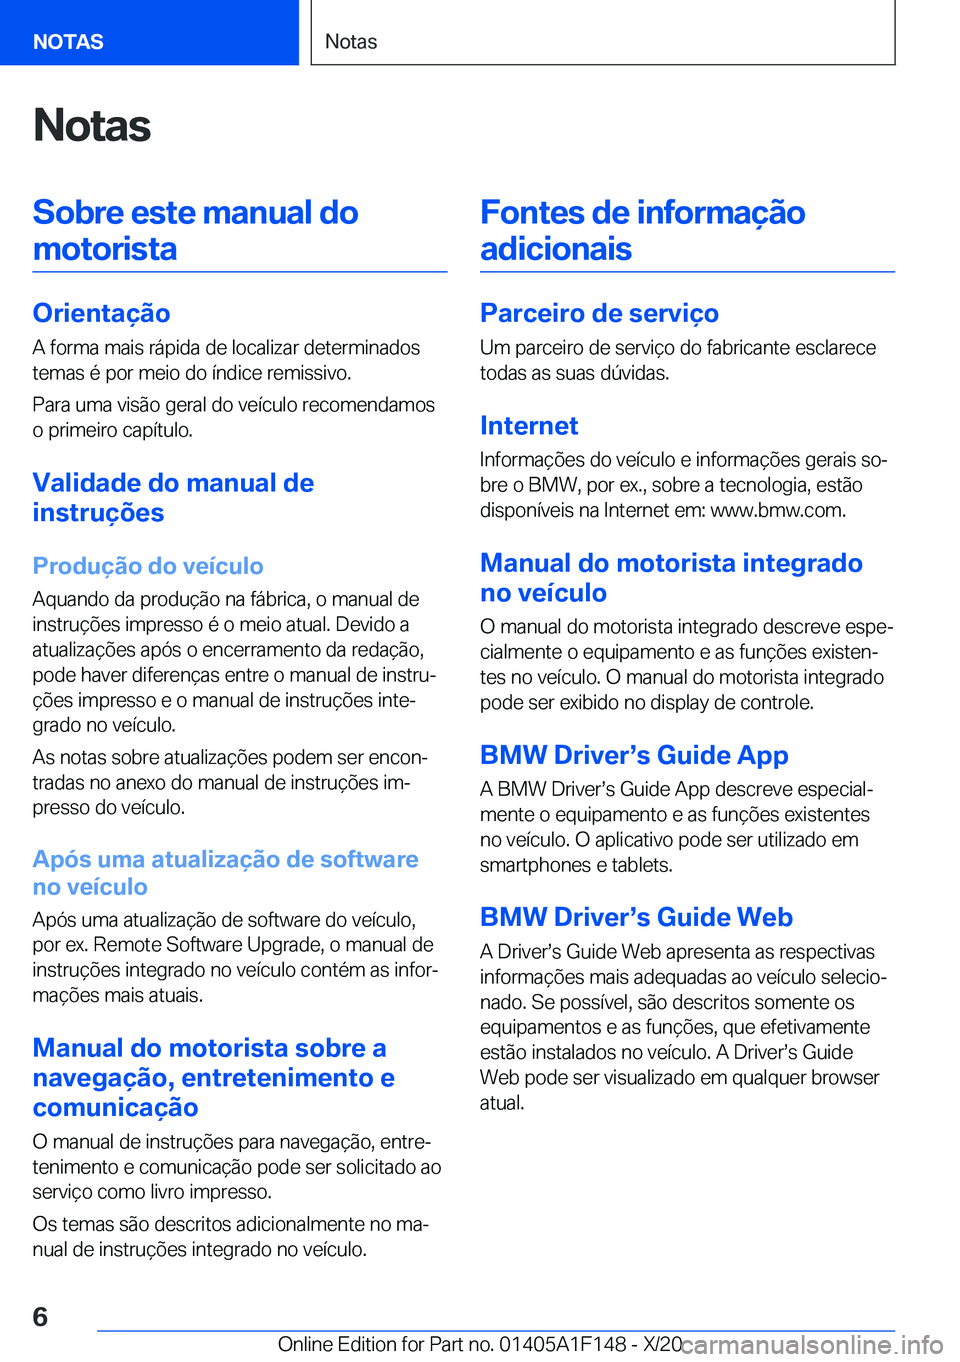 BMW X6 2021  Manual do condutor (in Portuguese) �N�o�t�a�s�S�o�b�r�e��e�s�t�e��m�a�n�u�a�l��d�o�m�o�t�o�r�i�s�t�a
�O�r�i�e�n�t�a�